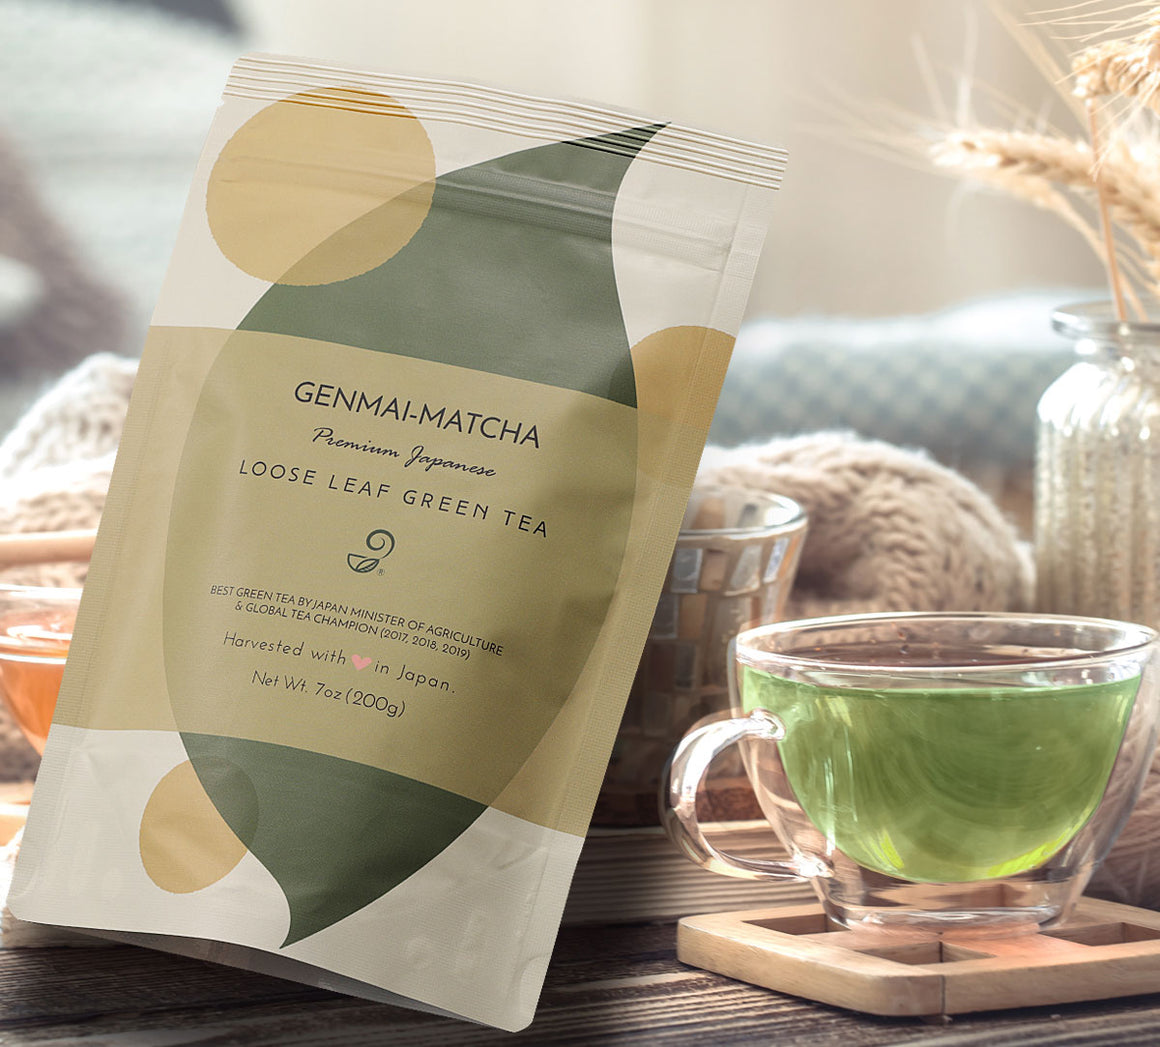 Genmai Matcha - Premium Japanese Green Tea with Brown Rice & Matcha